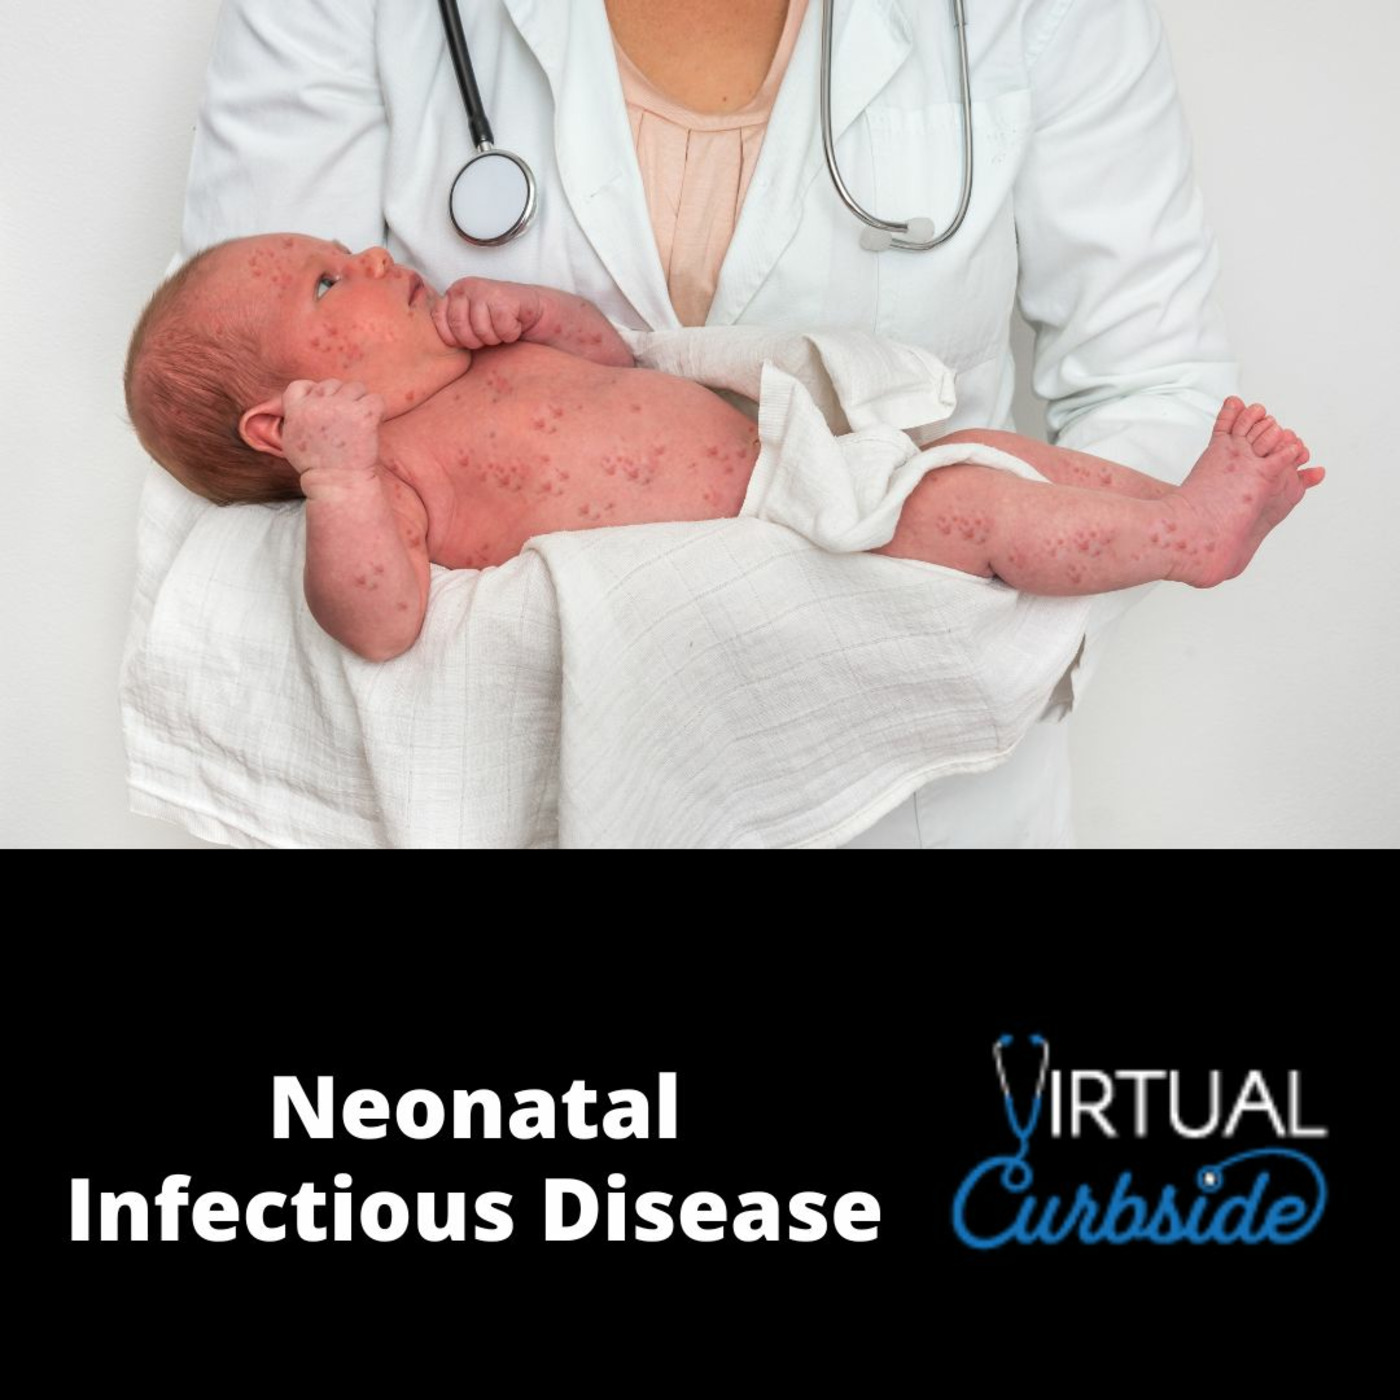 Episode 268: #62-4 Neonatal Infectious Disease: Q & A